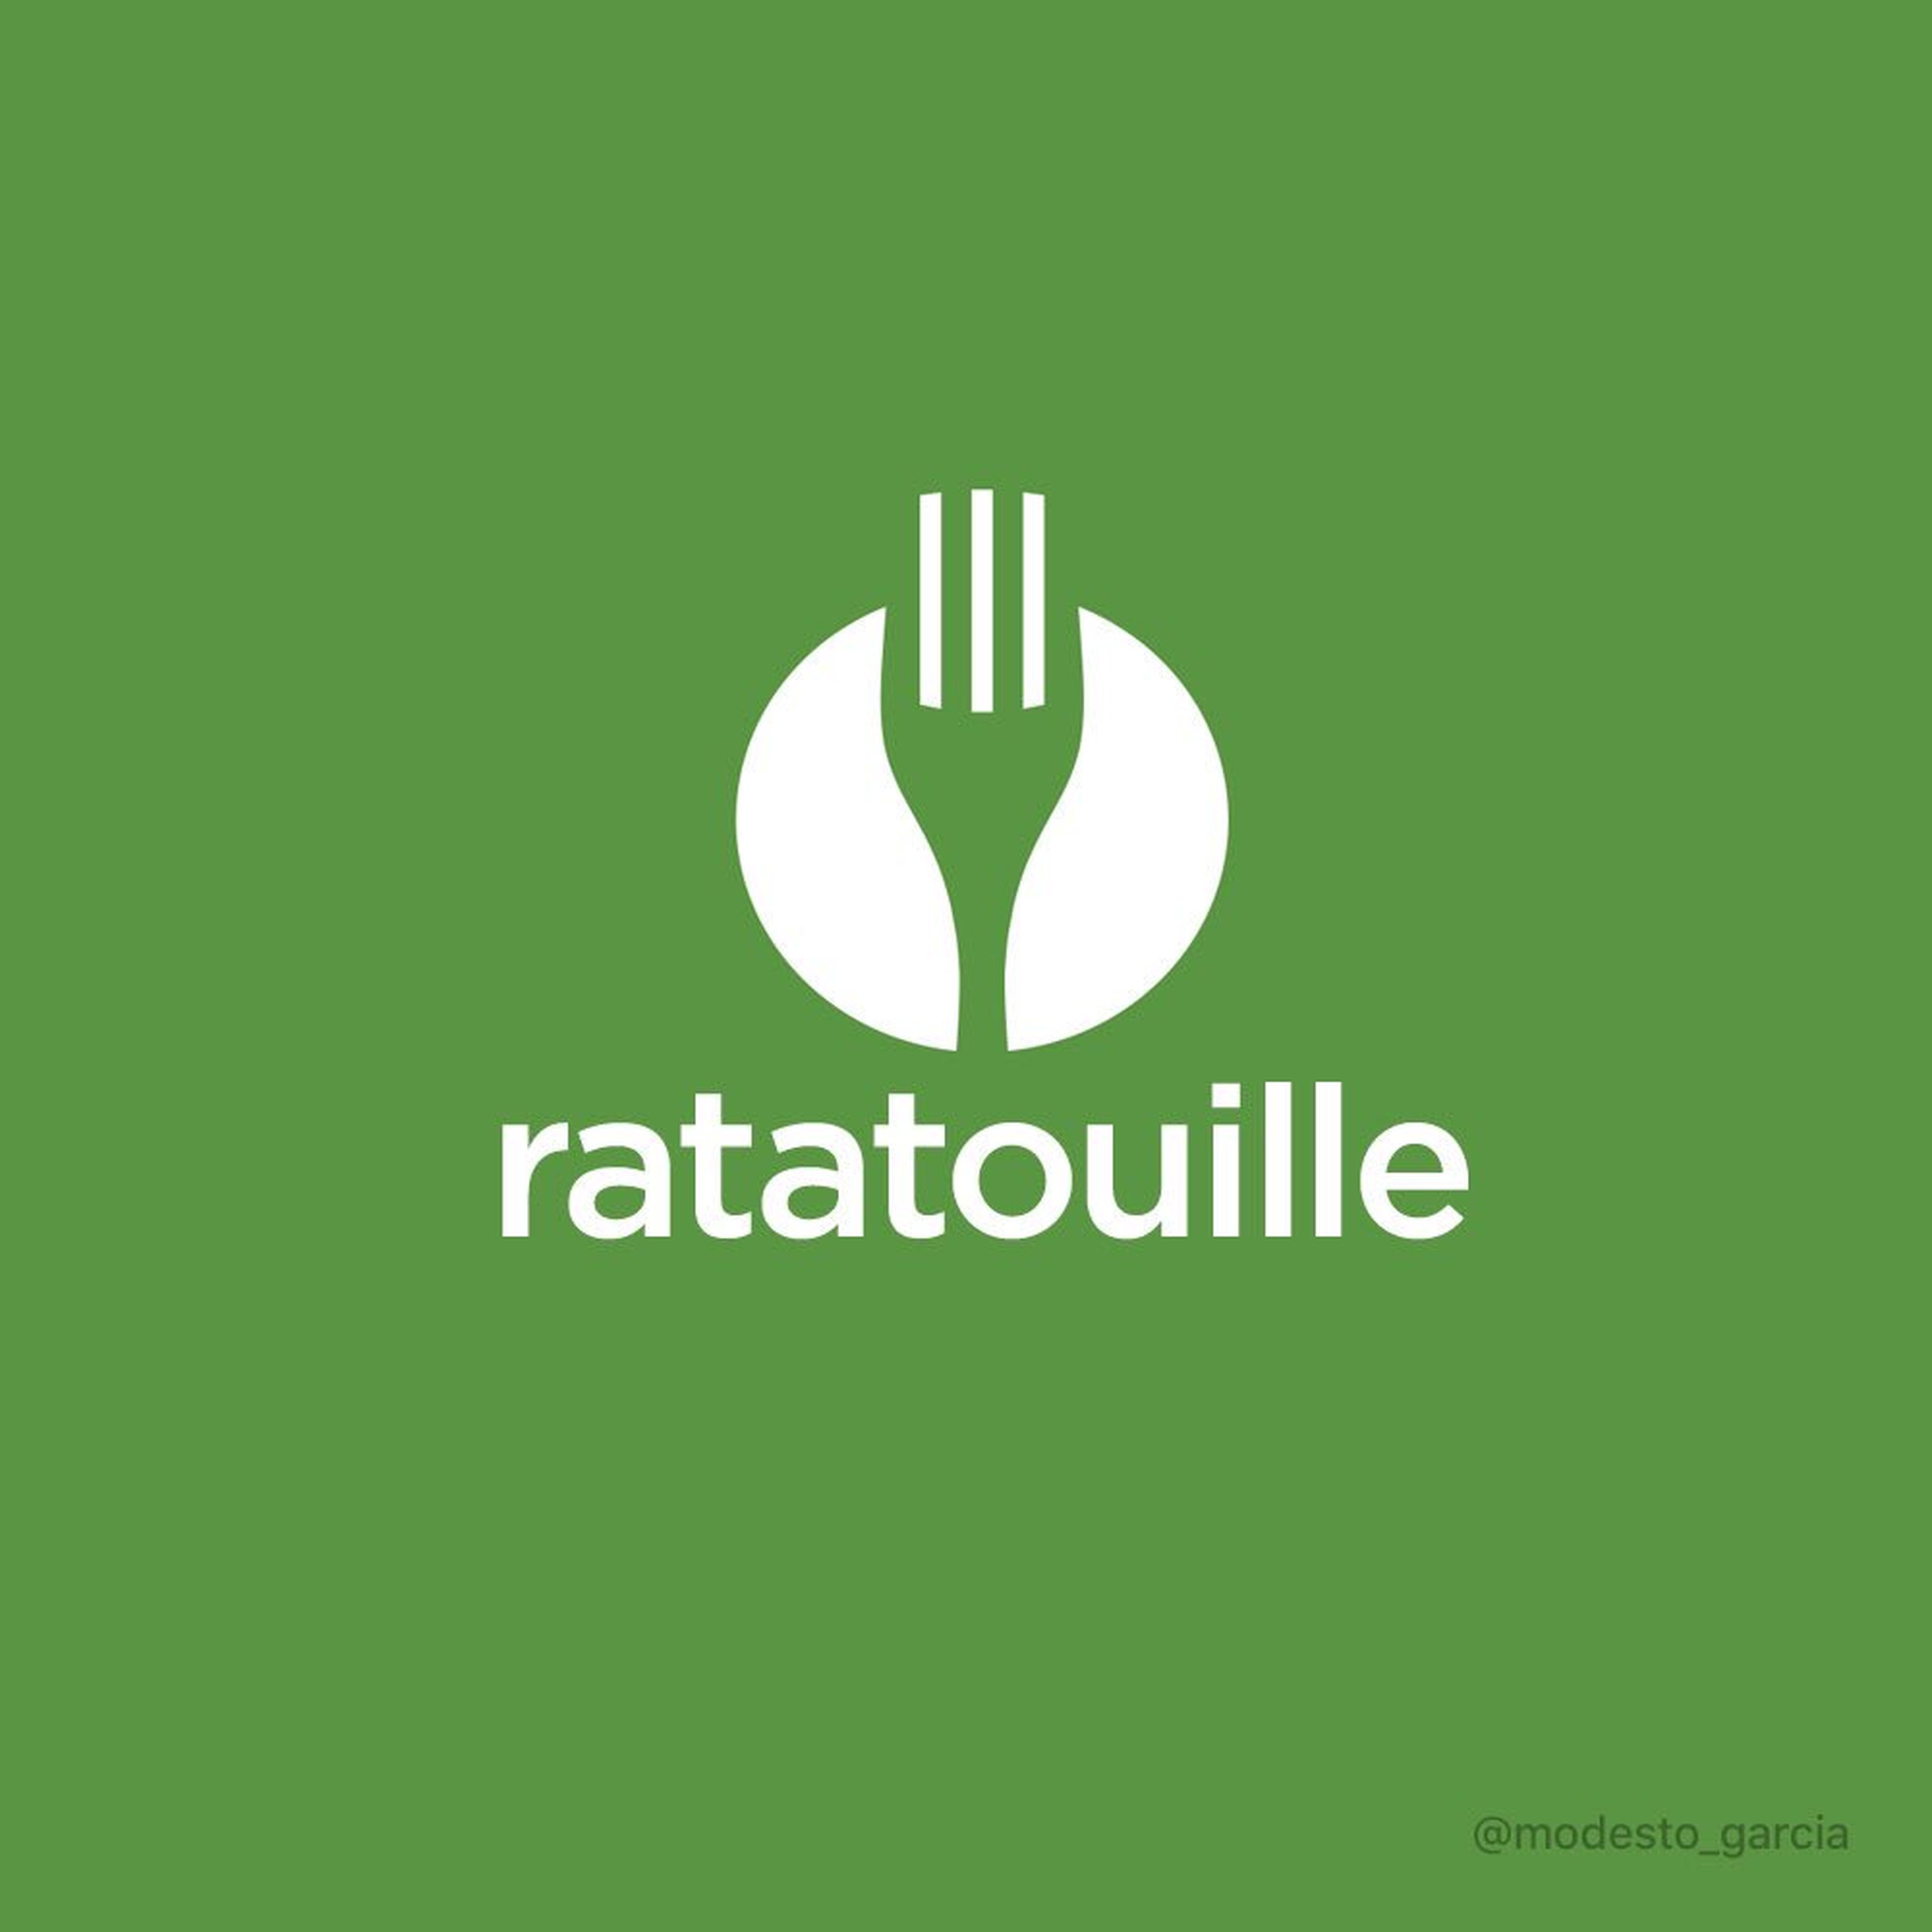 Si Ratatouille fuera un logo